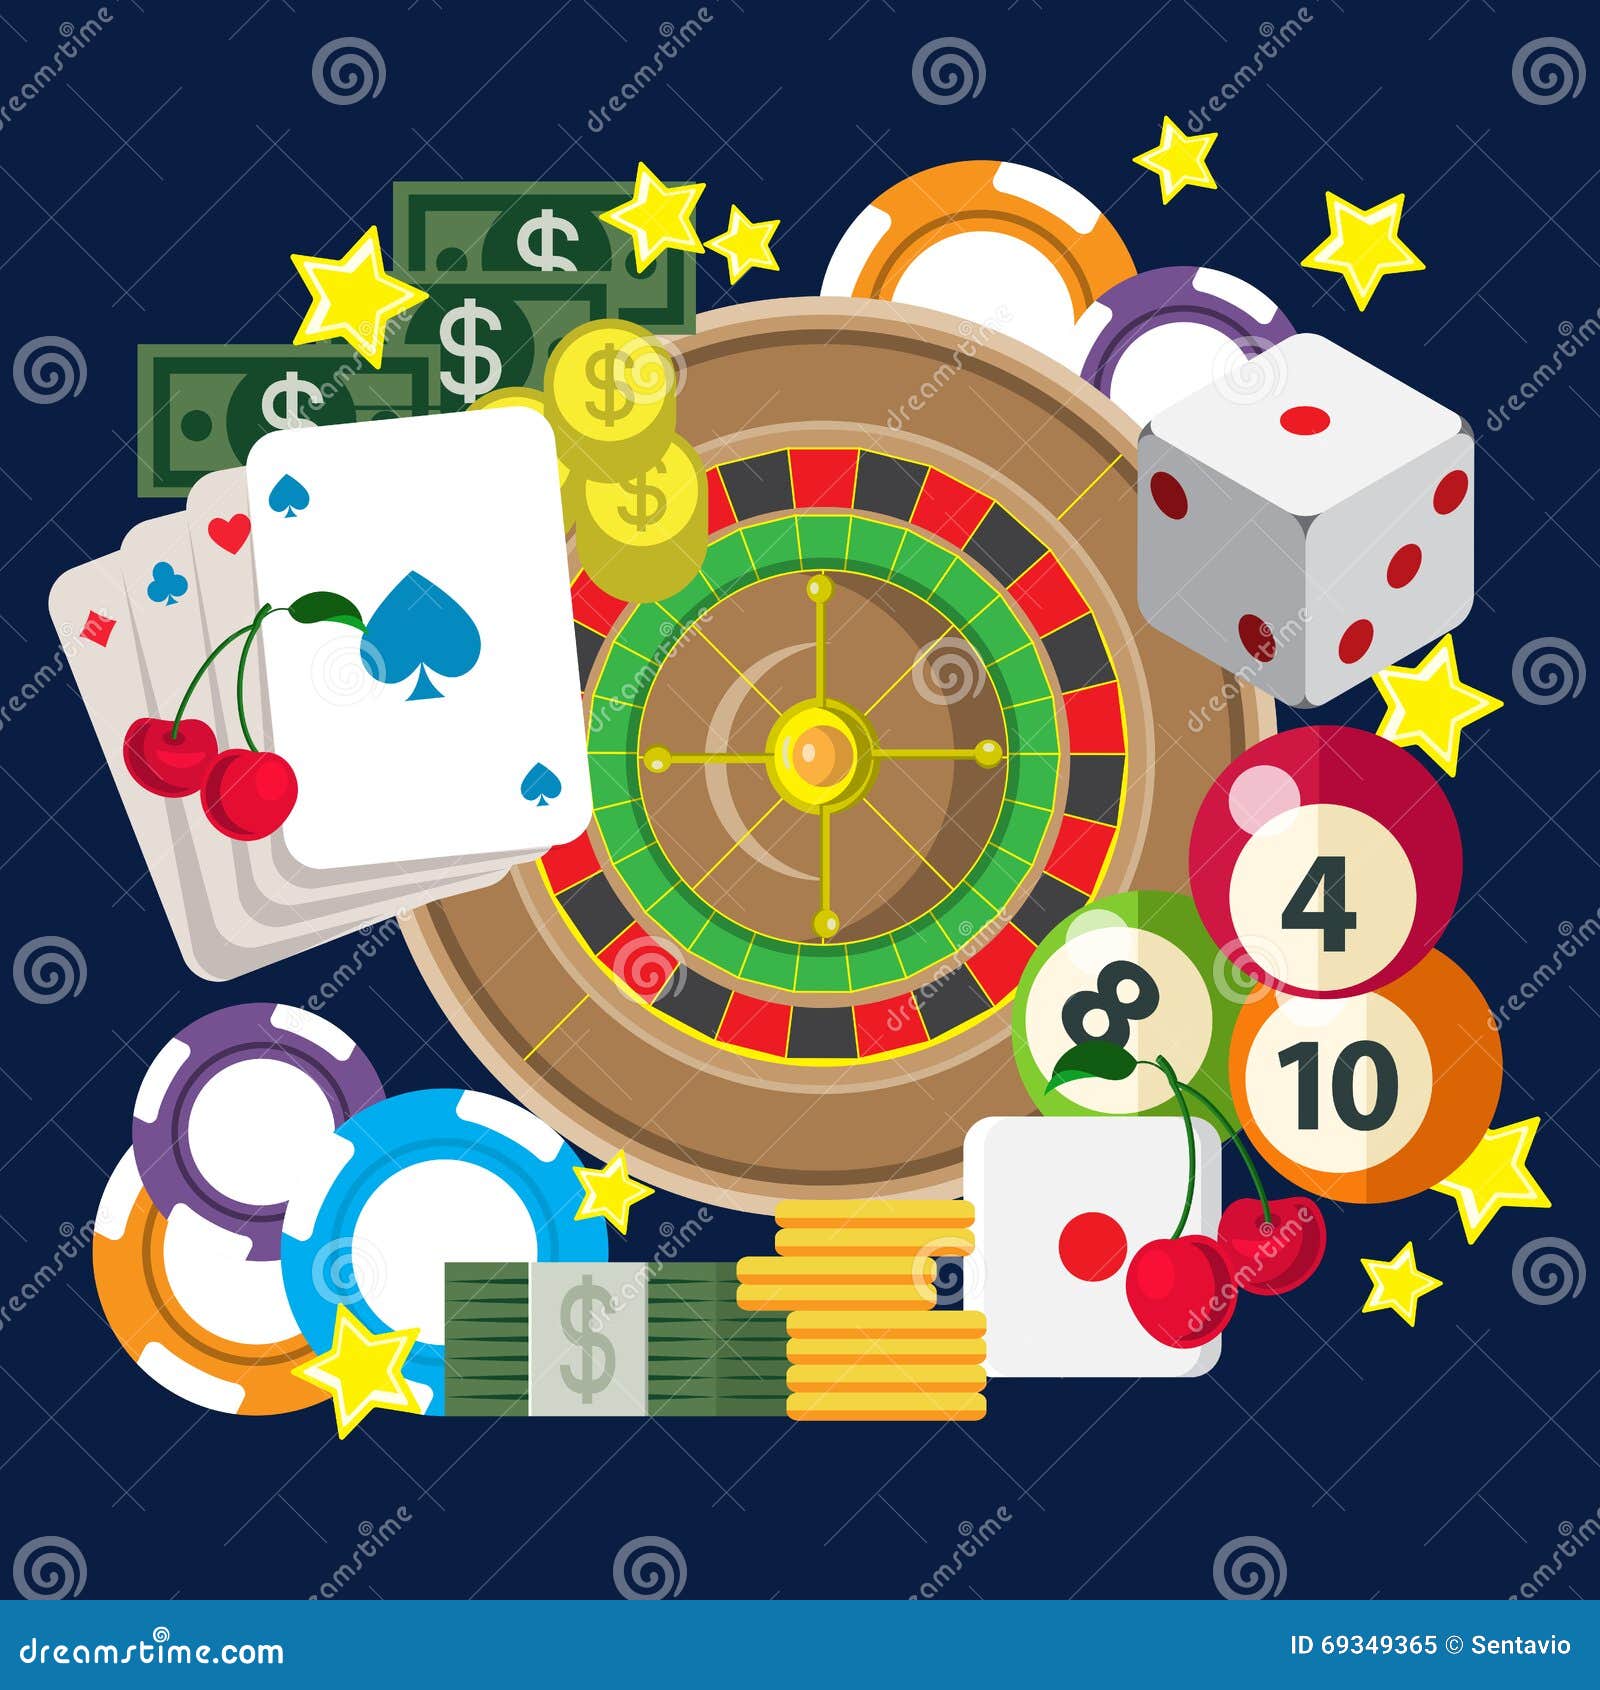 Best Real Money Online Casino - $ Bonus to Play @ Planet7